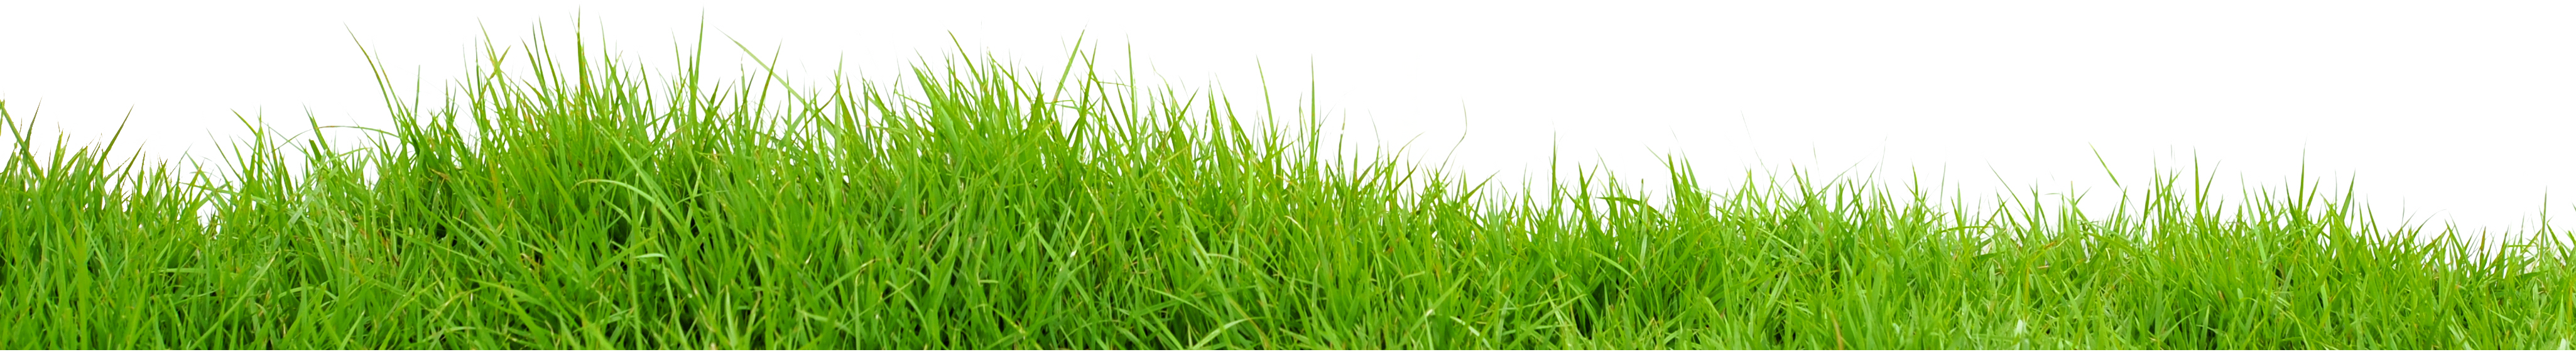 Landschaftsgrün-Gras-Feld-PNG-Bild